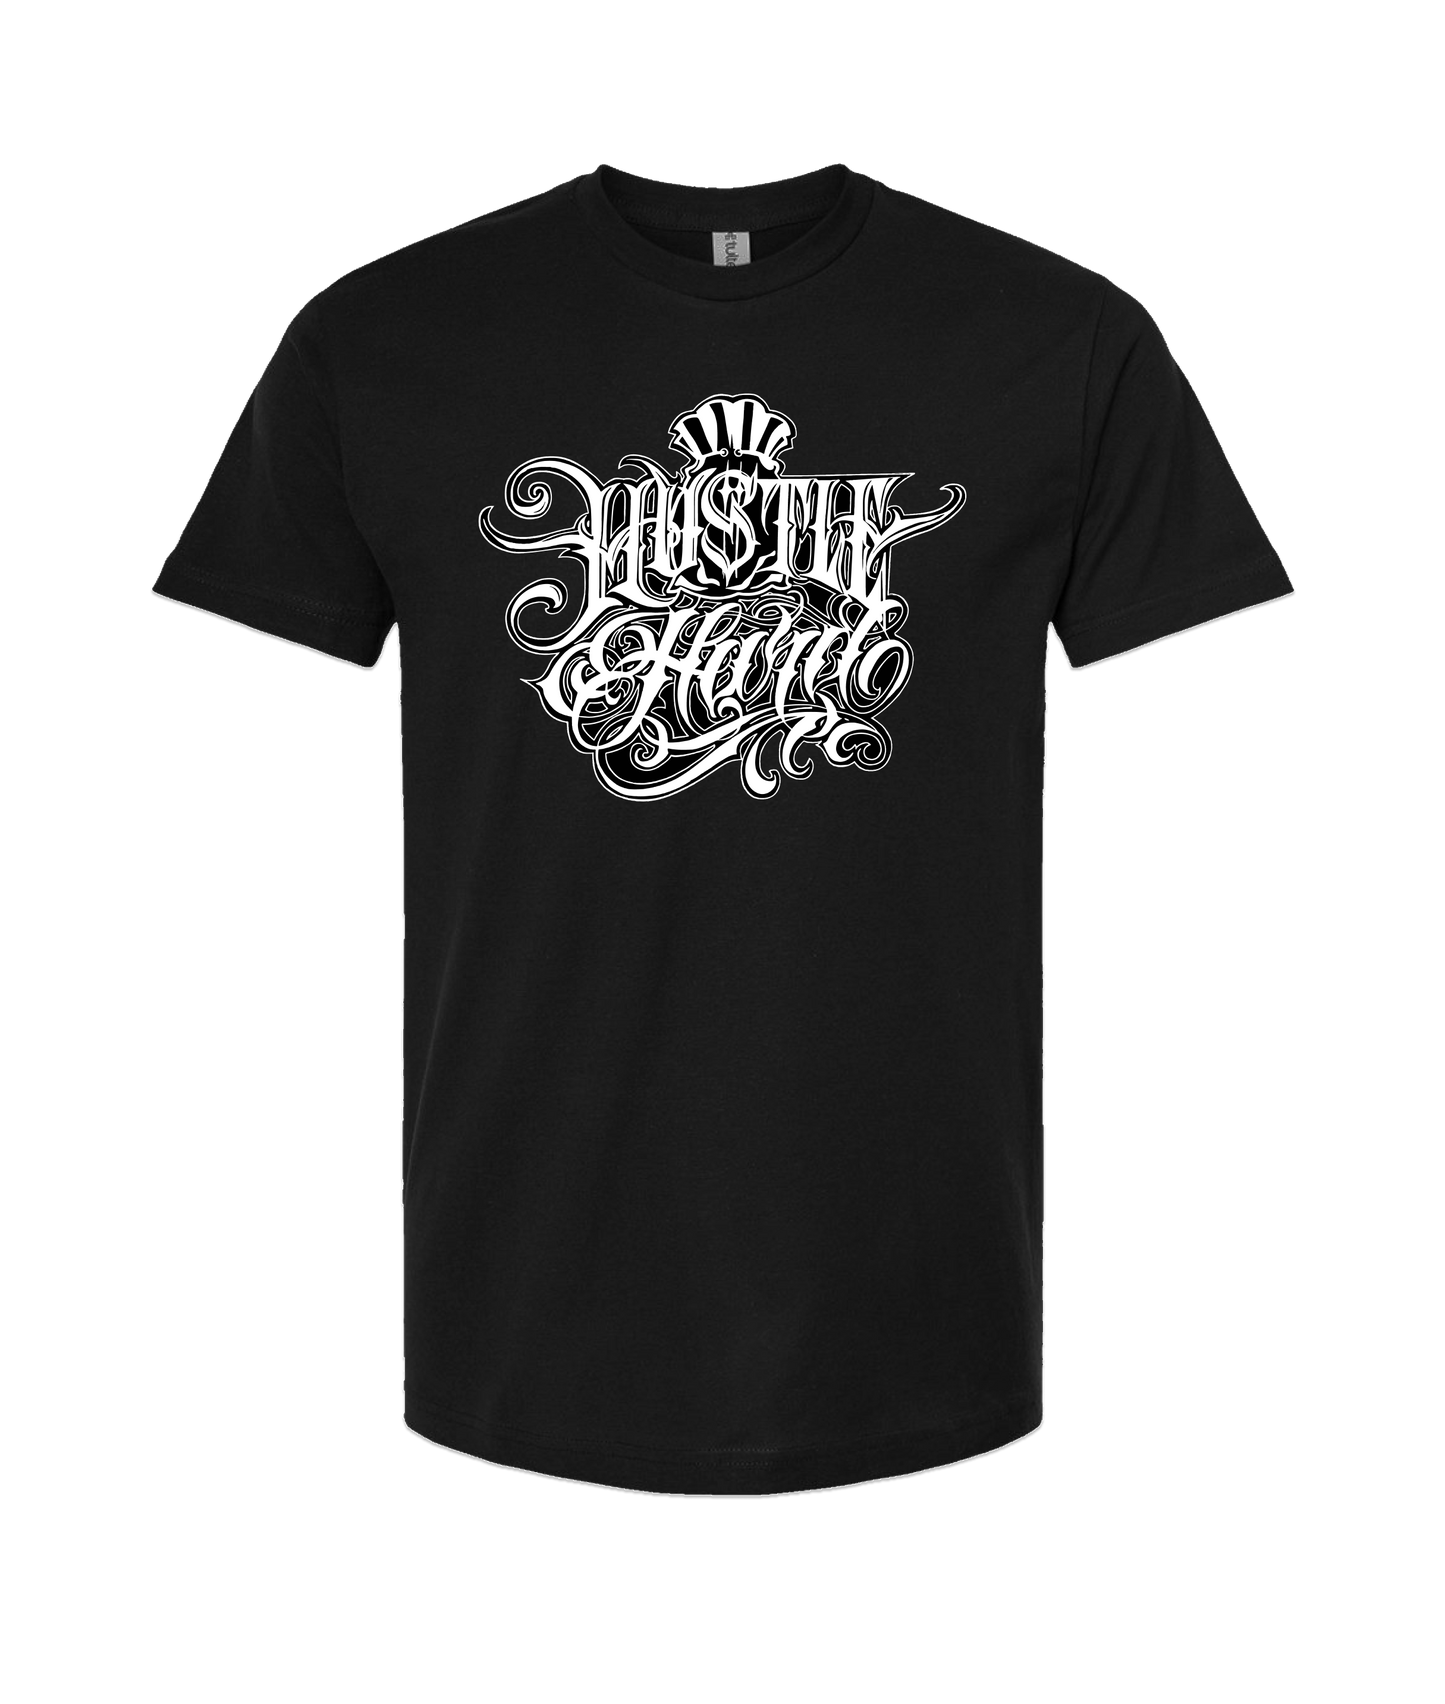 Hu$tle Hard - LOGO 4 - Black T-Shirt